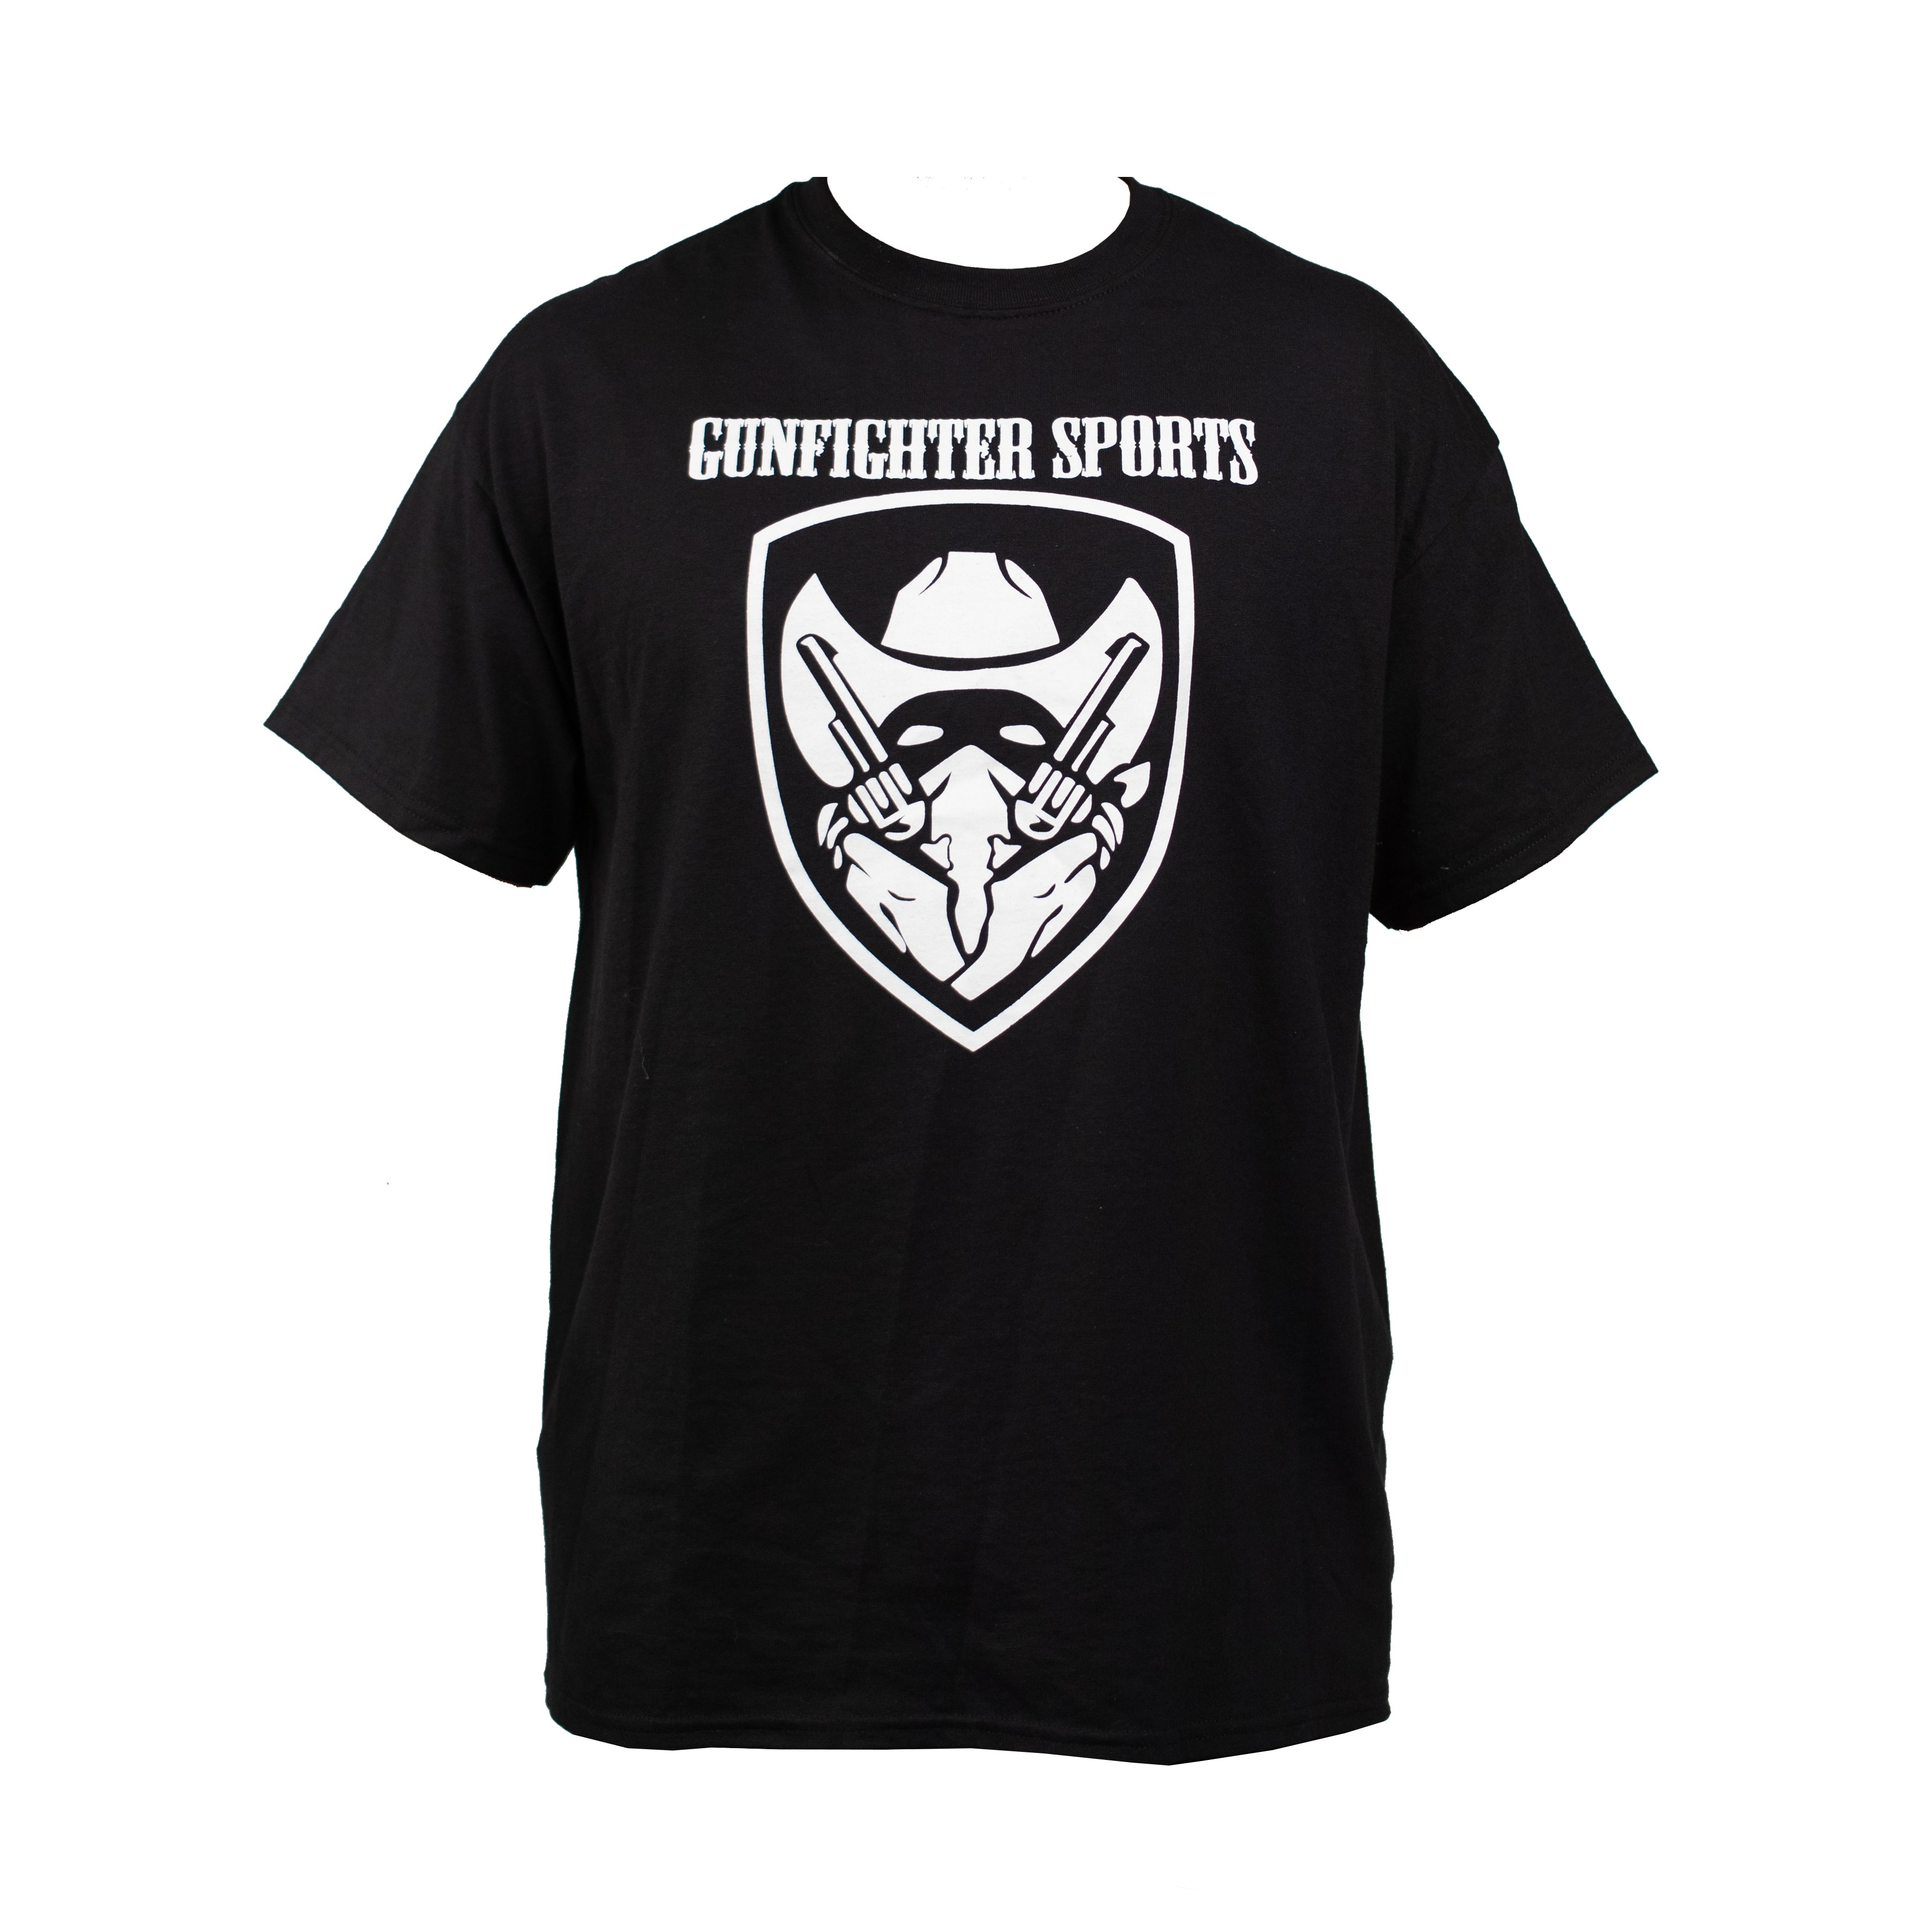 Gunfighter Sports Tee Shirt - Black